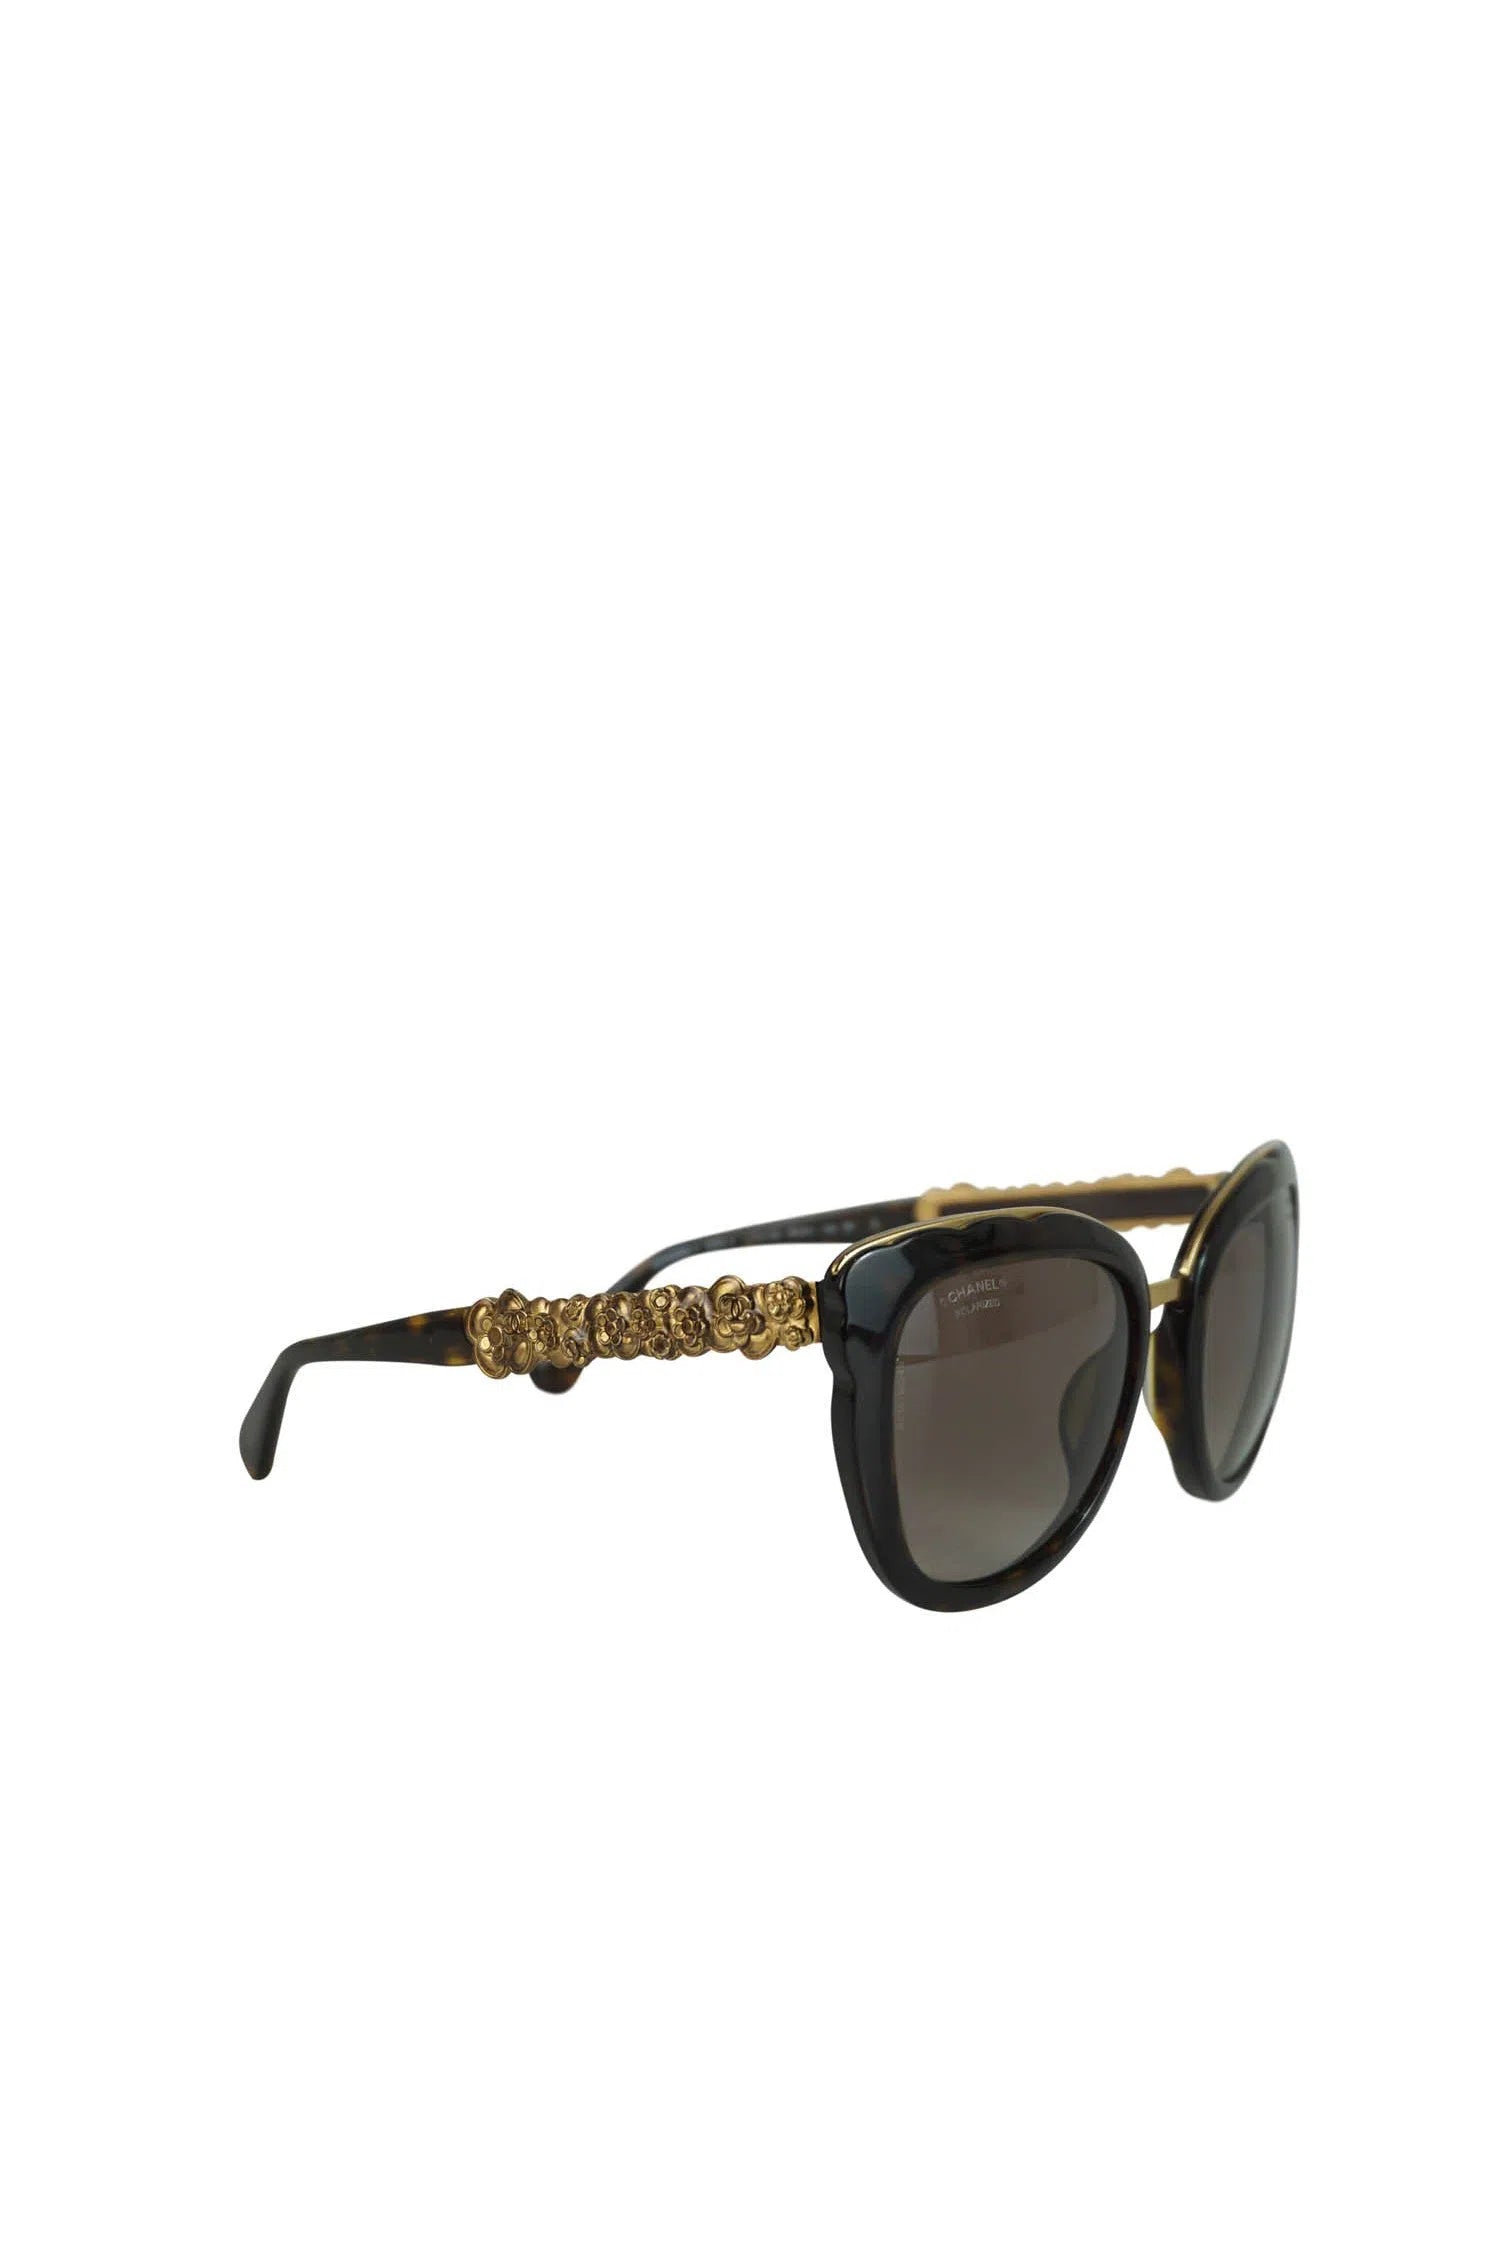 Chanel Brown / Gold Bijoux Polarized Sunglasses - Foxy Couture Carmel